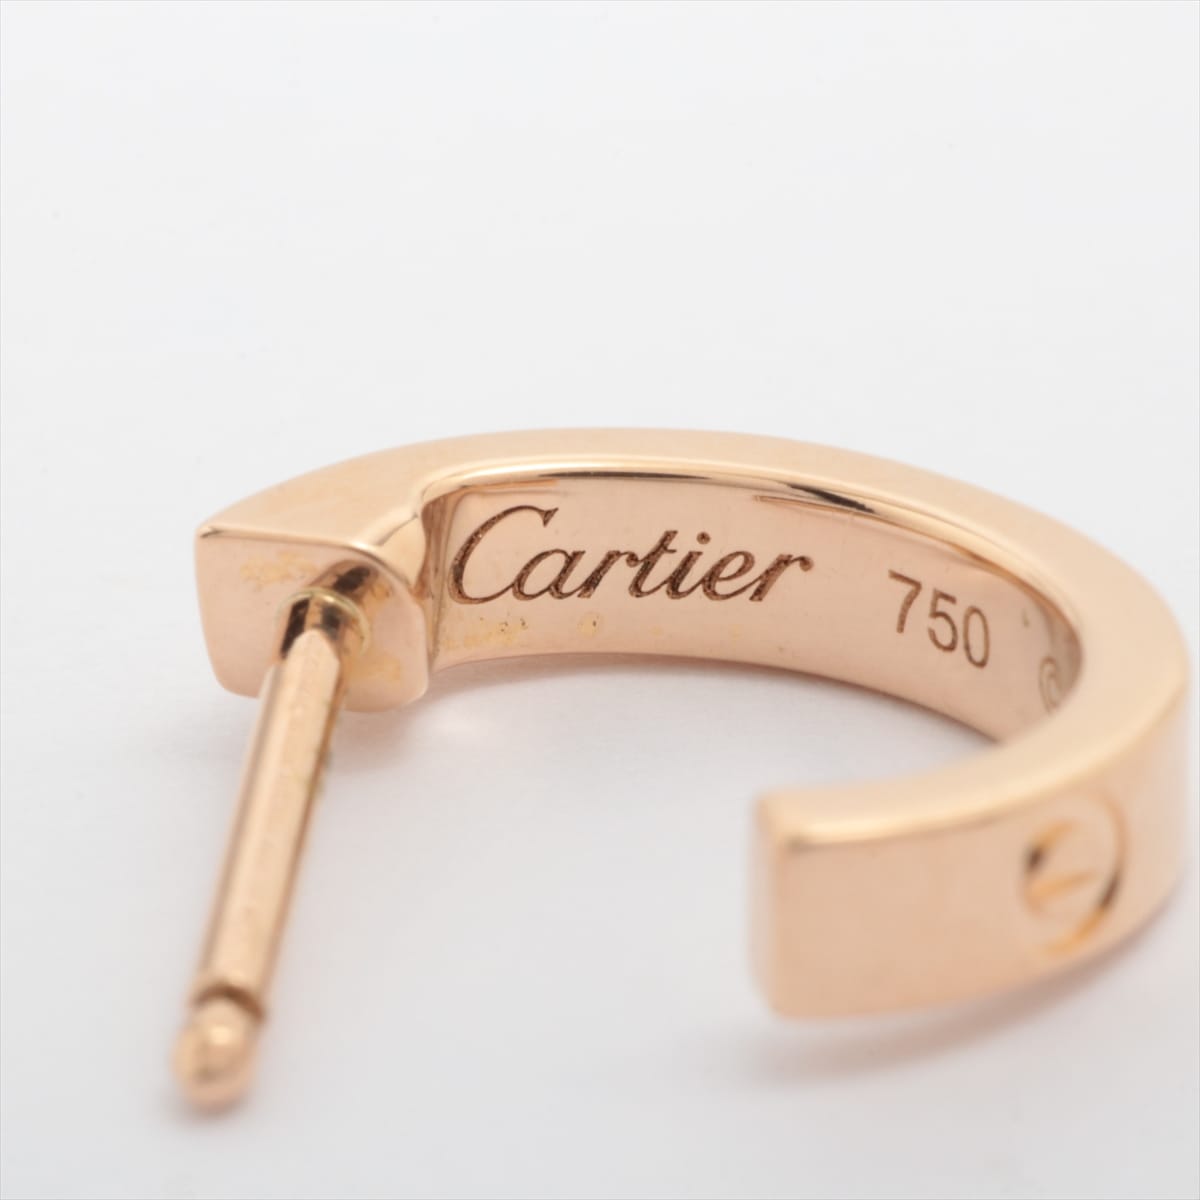 Cartier Mini Love Piercing jewelry 750(PG) 3.3g